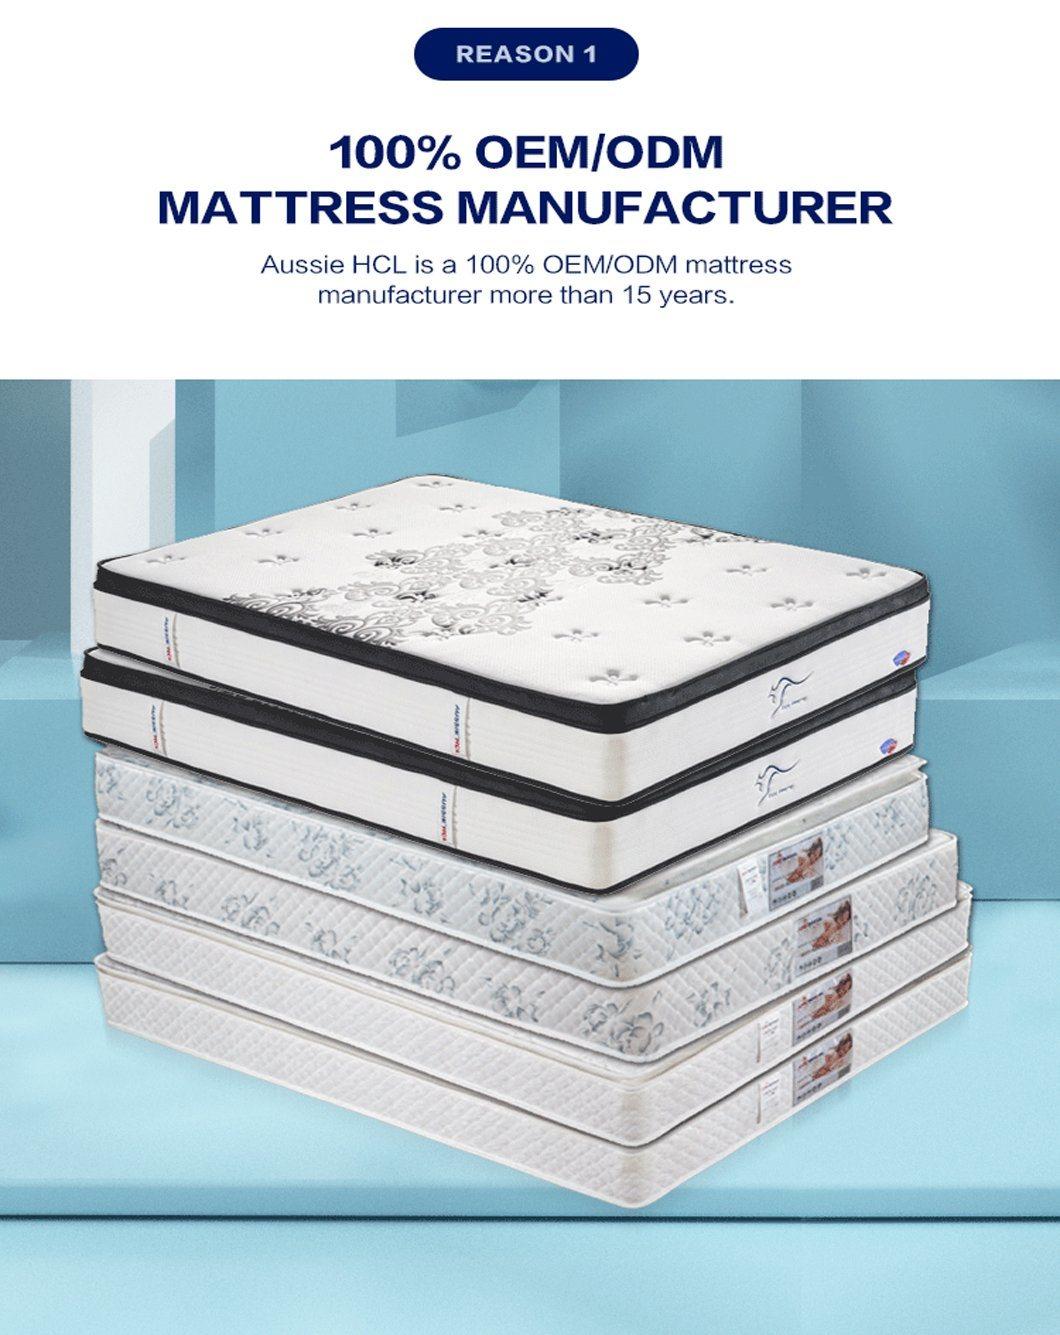 Royal Luxury Sleep Well Single Shop Full Inch Mattresses High Density Swirl Memory Gel Rebonded Foam Mattress